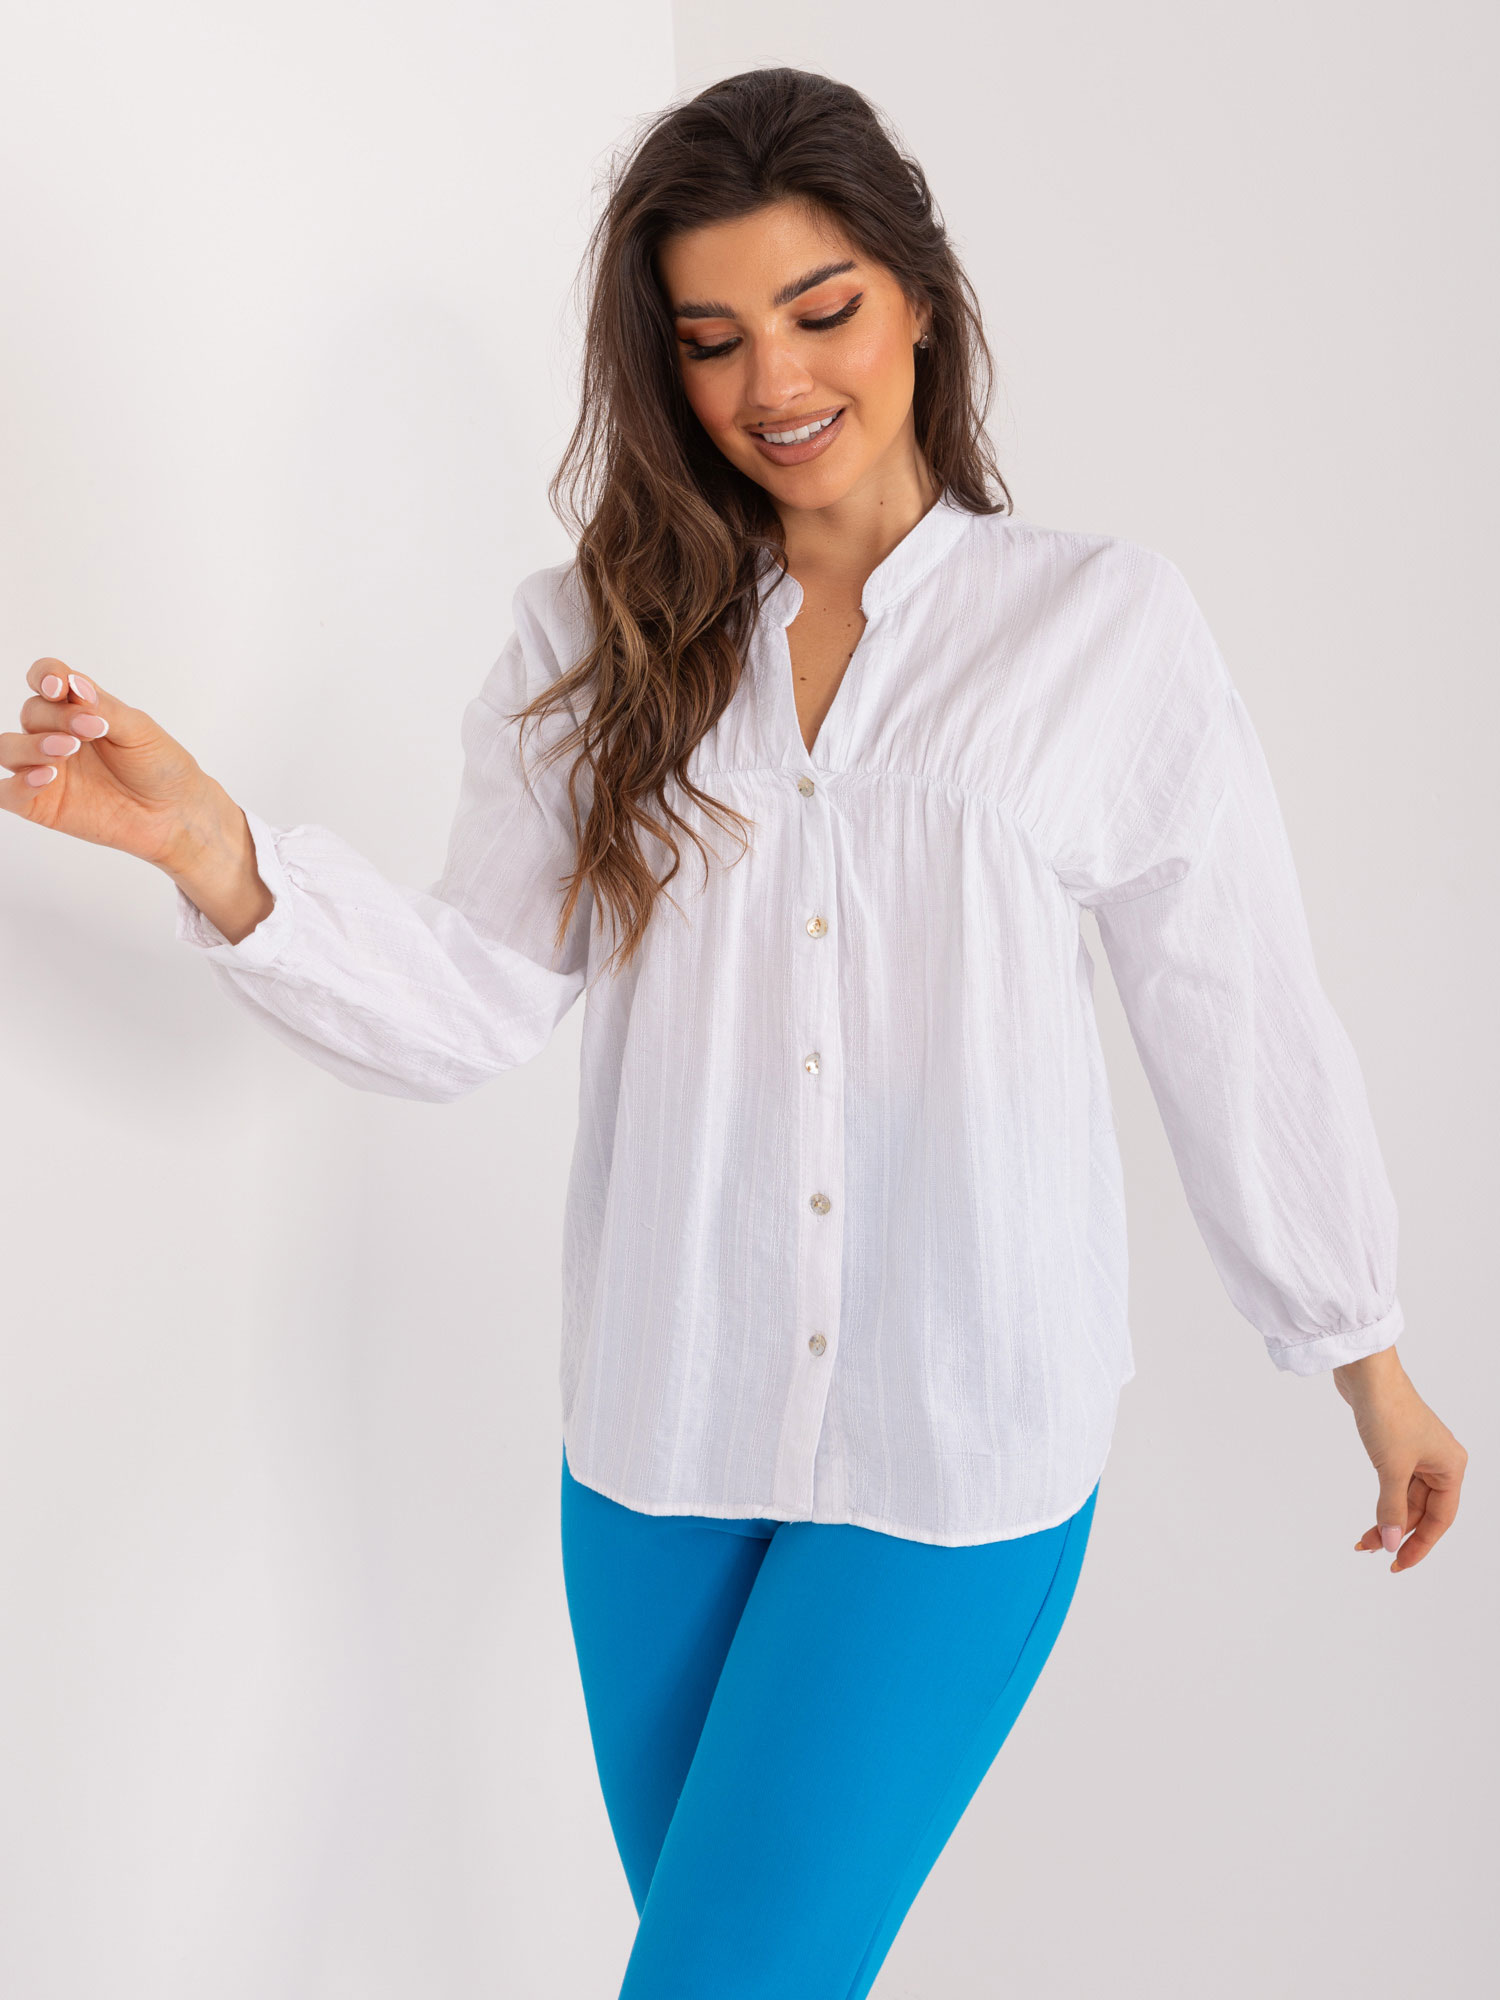 White Casual Women's Oversize Shirt